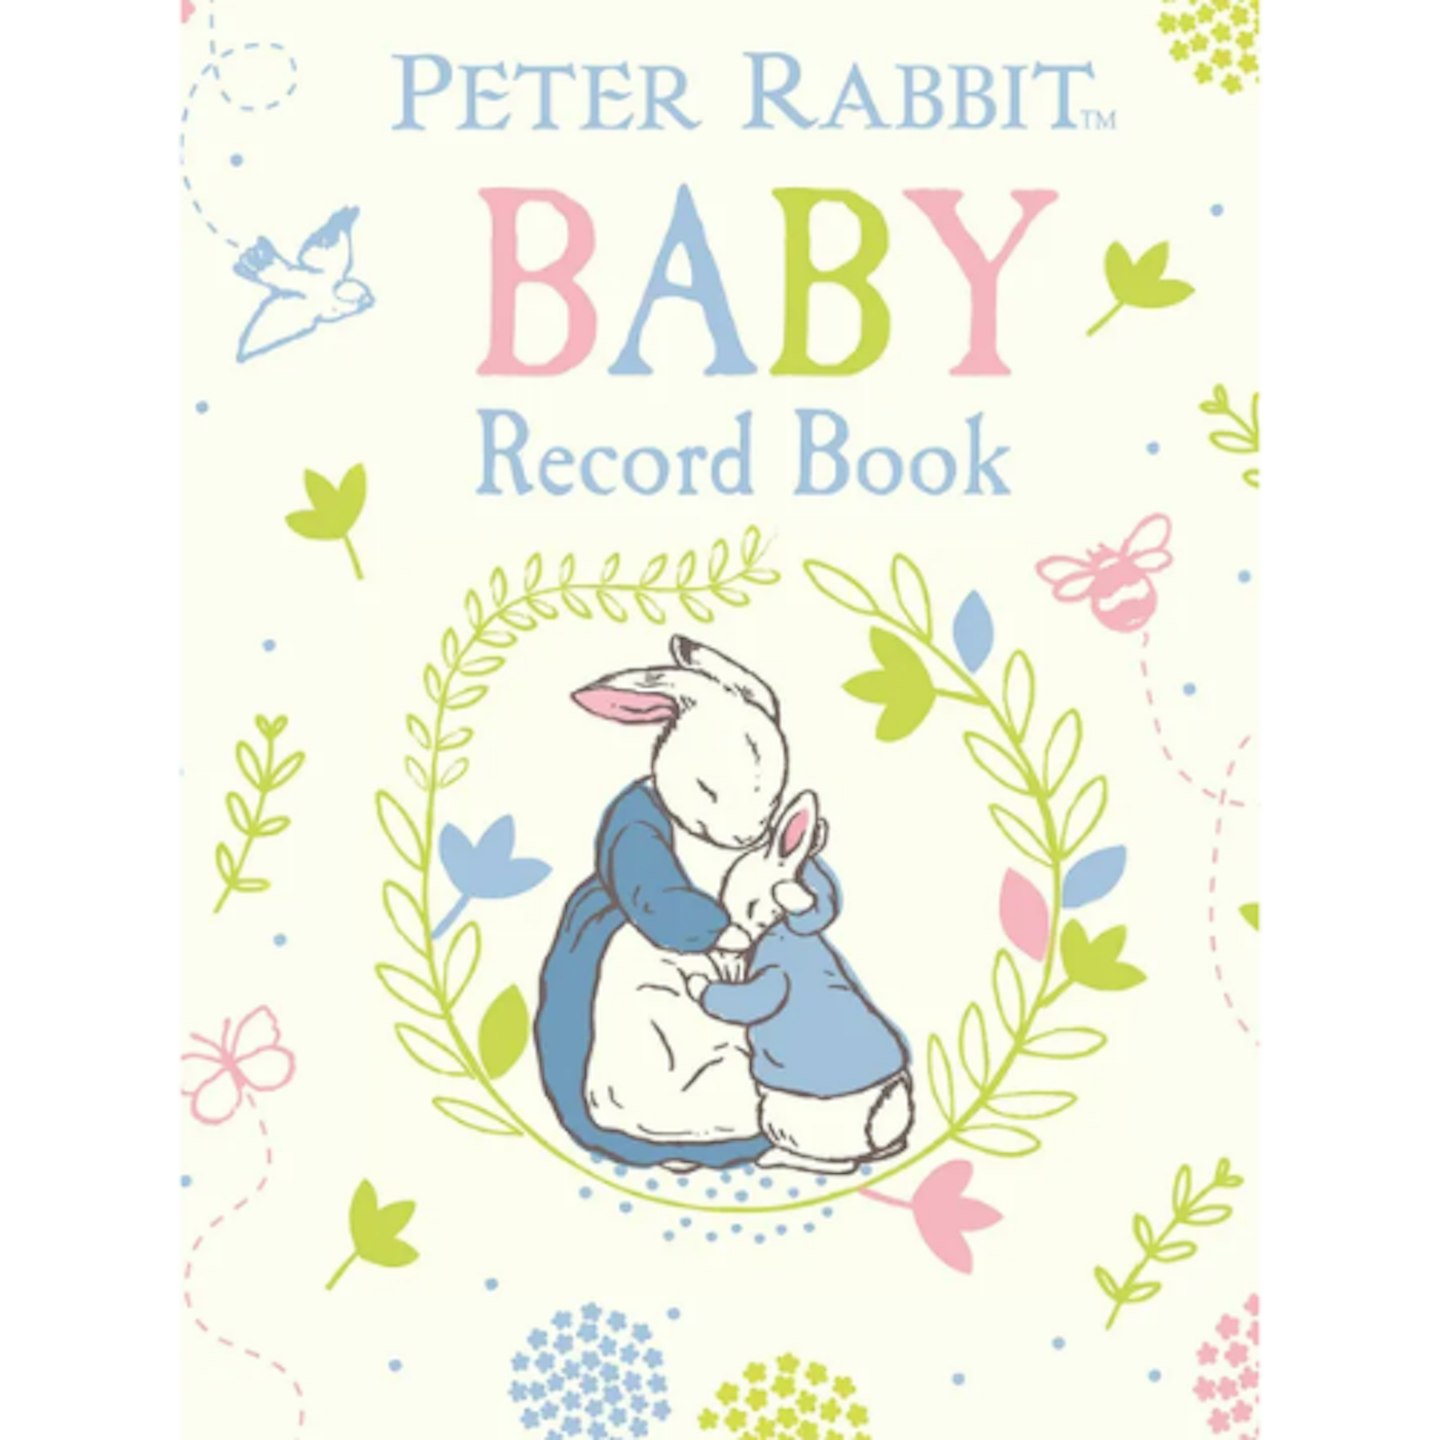 Peter Rabbit Baby Record Book, £19.99